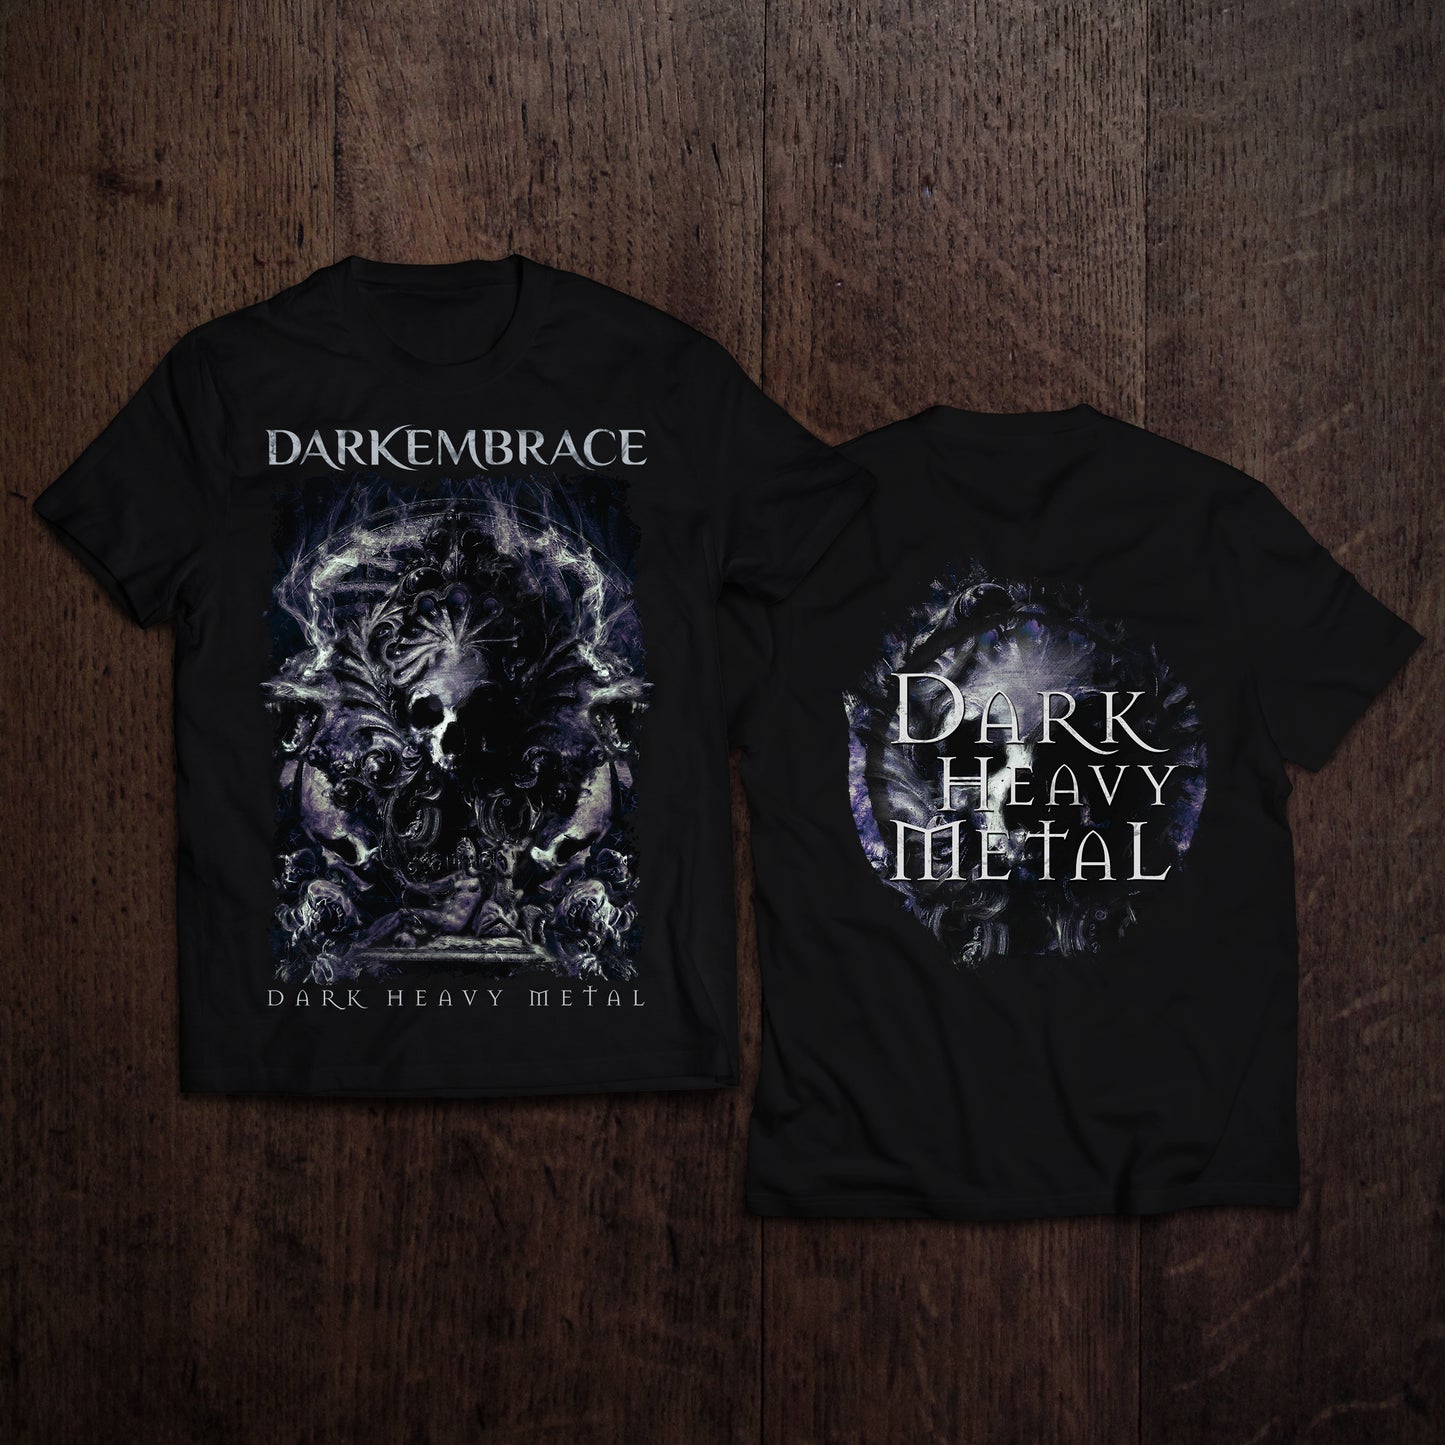 Dark Heavy Metal t-shirt